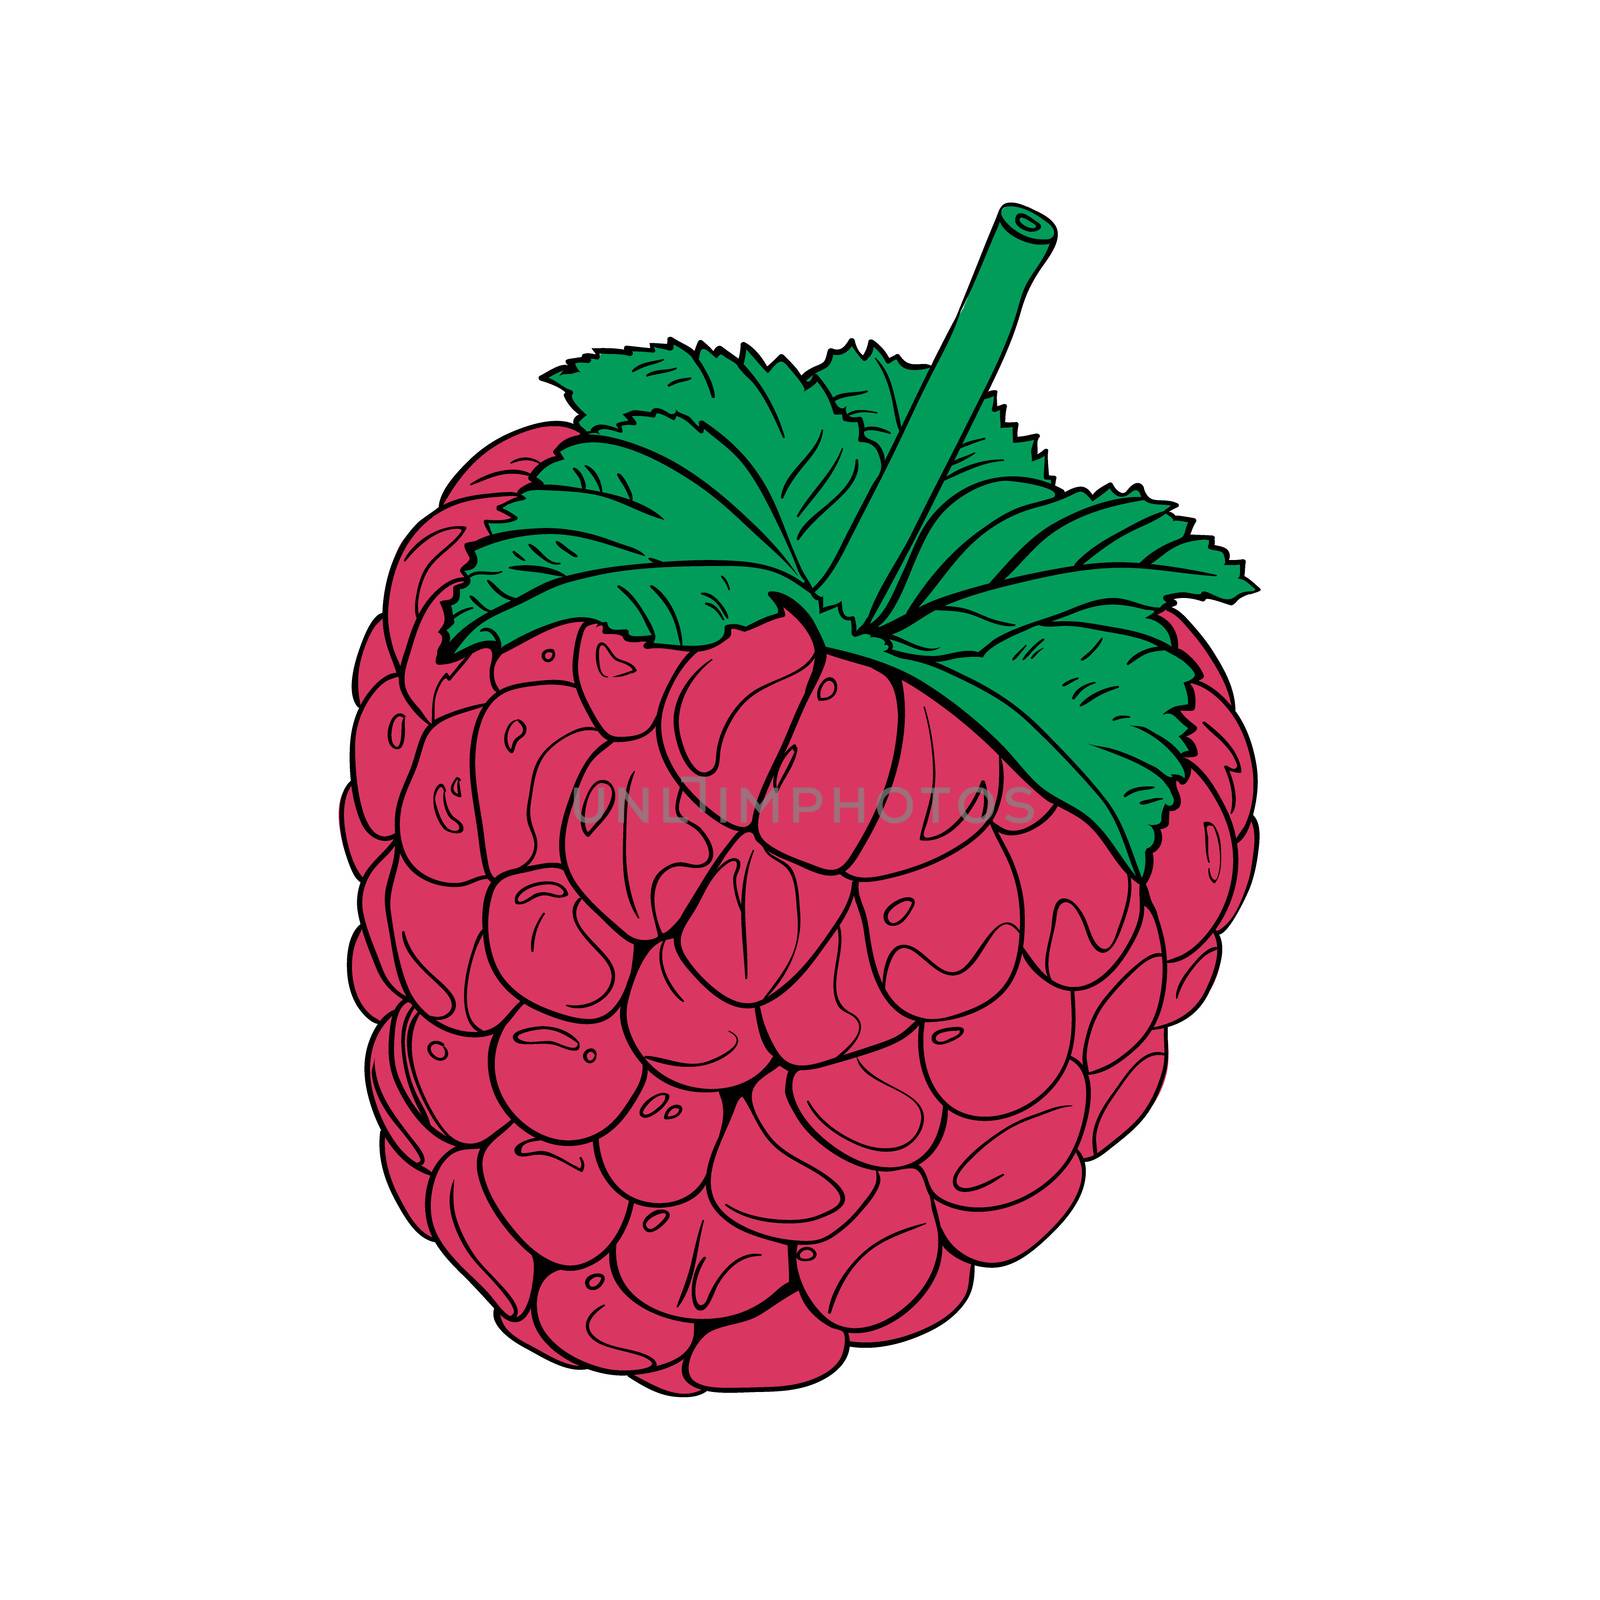 Color vector illustration. Raspberries icon by VeekSegal